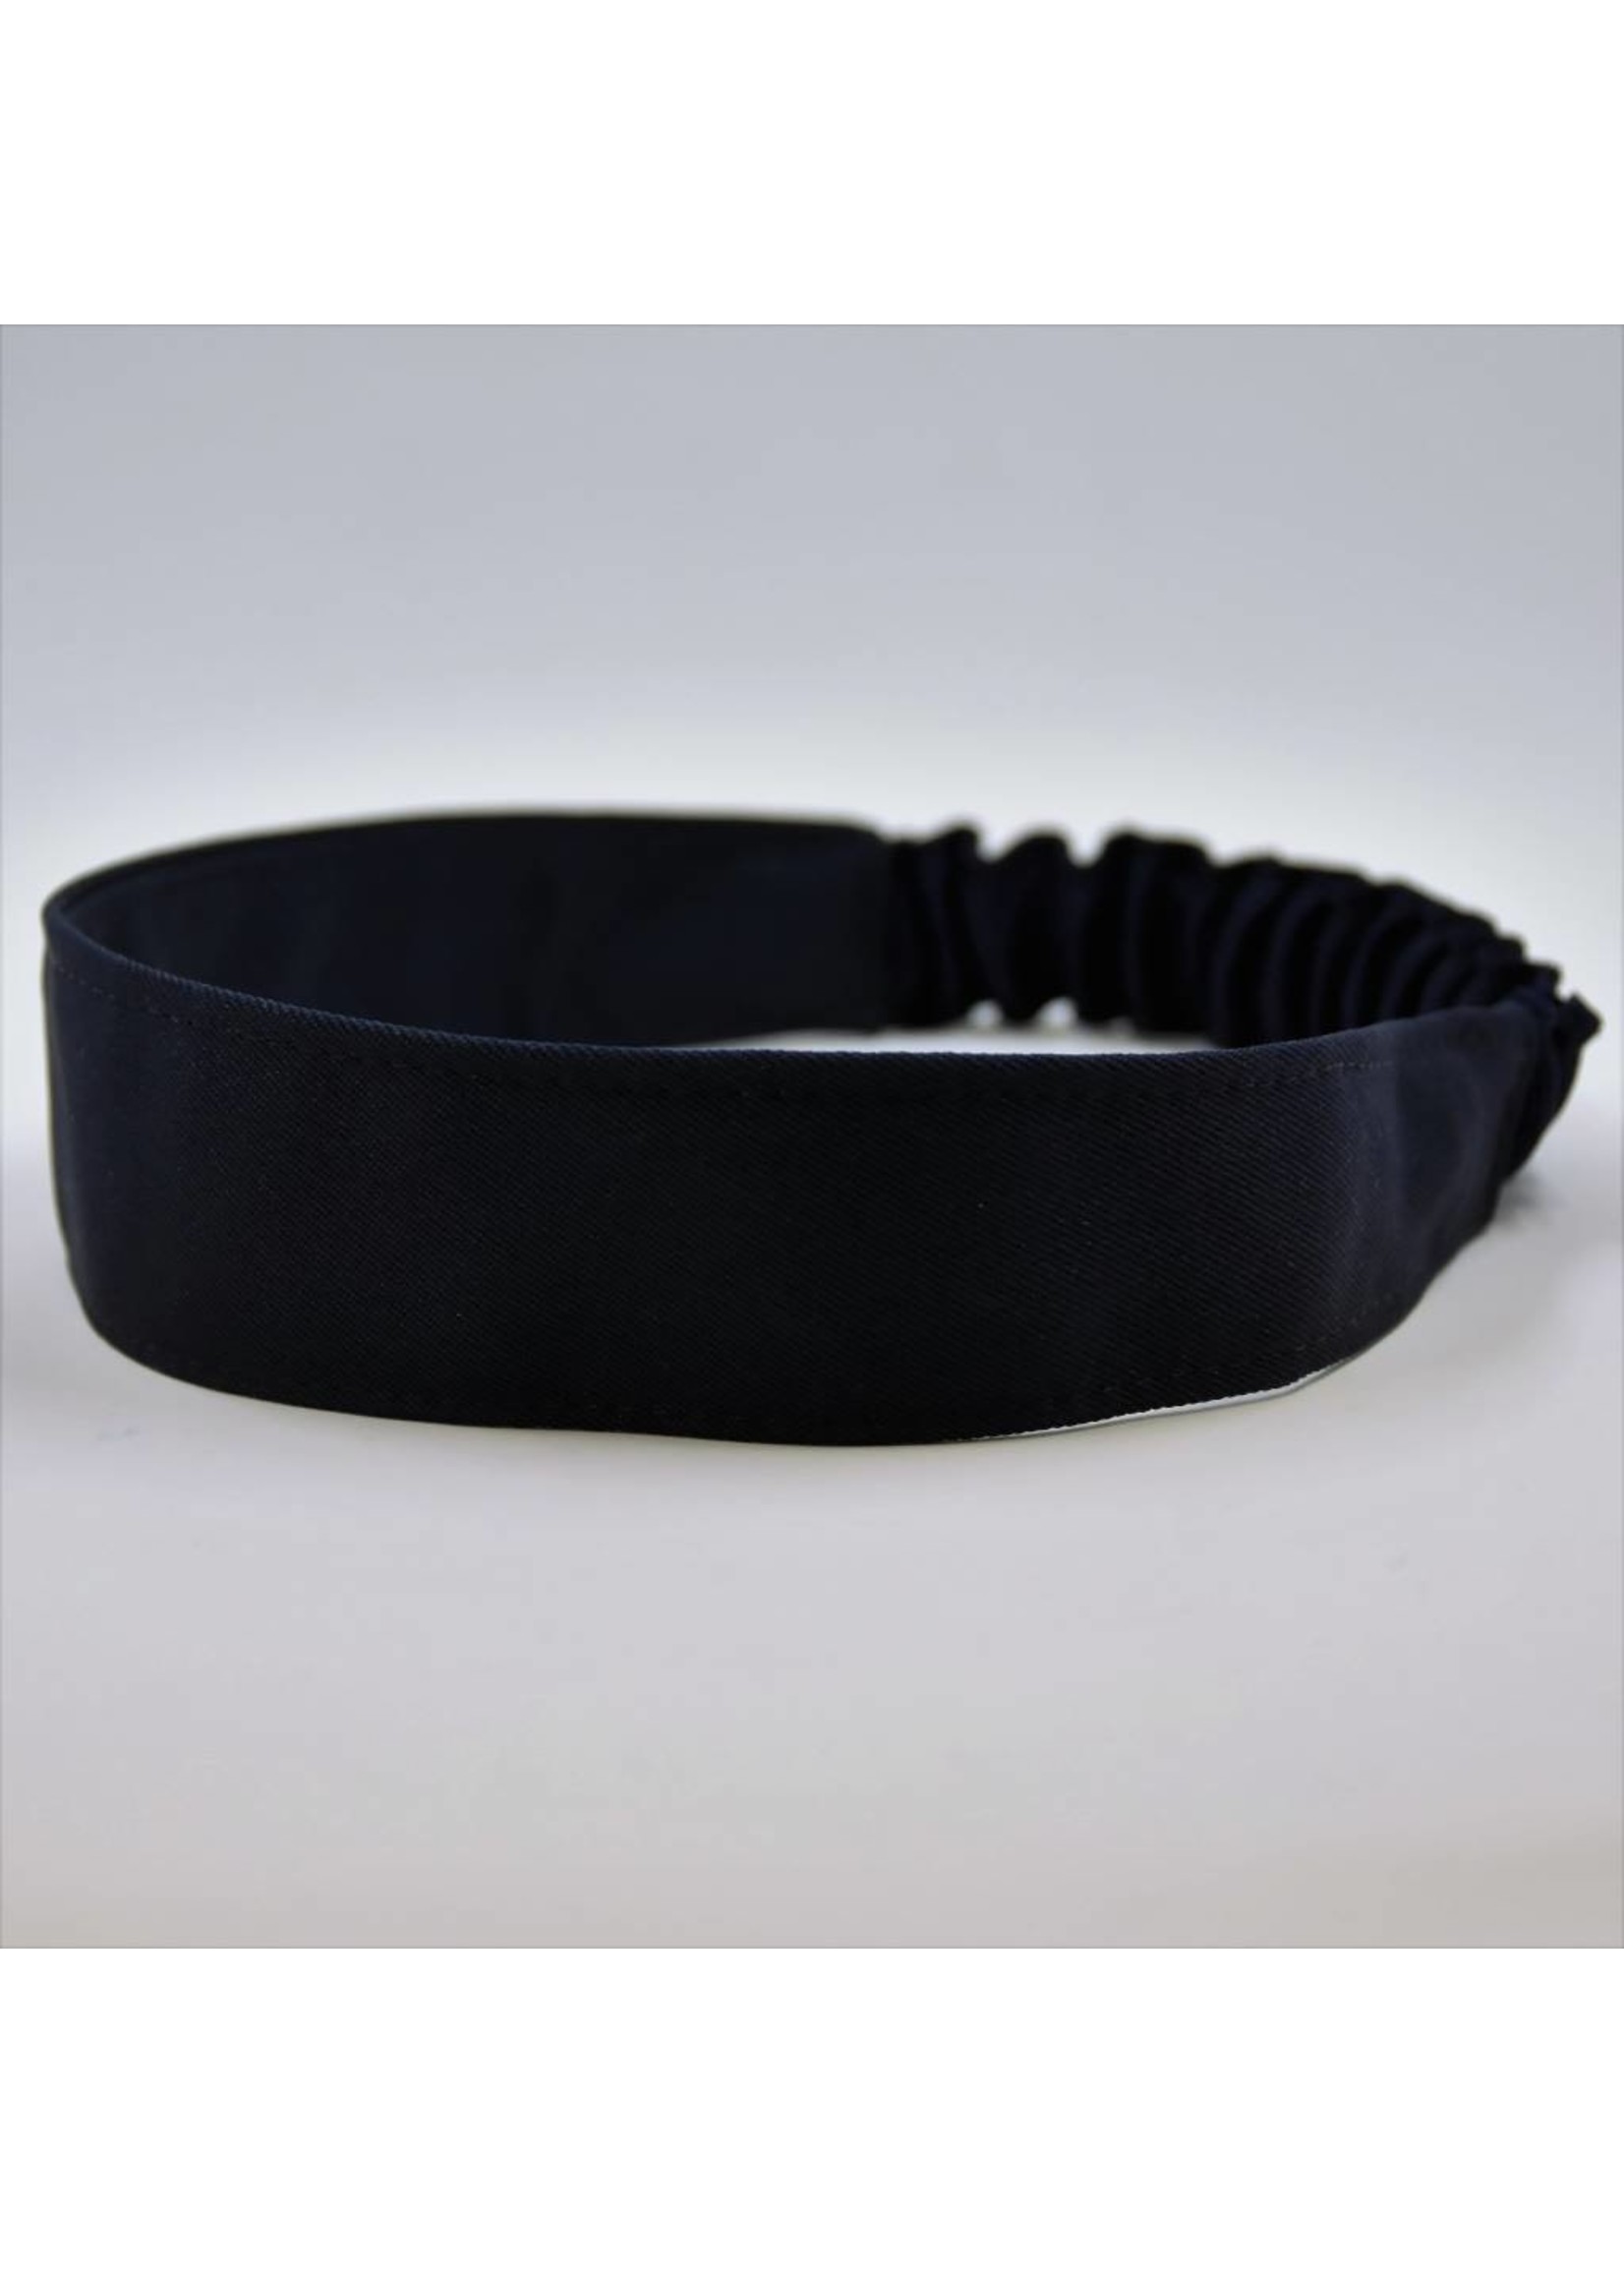 UNIFORM Hair - Navy Soft Headband, elastic back approx. 1 1/2" wide